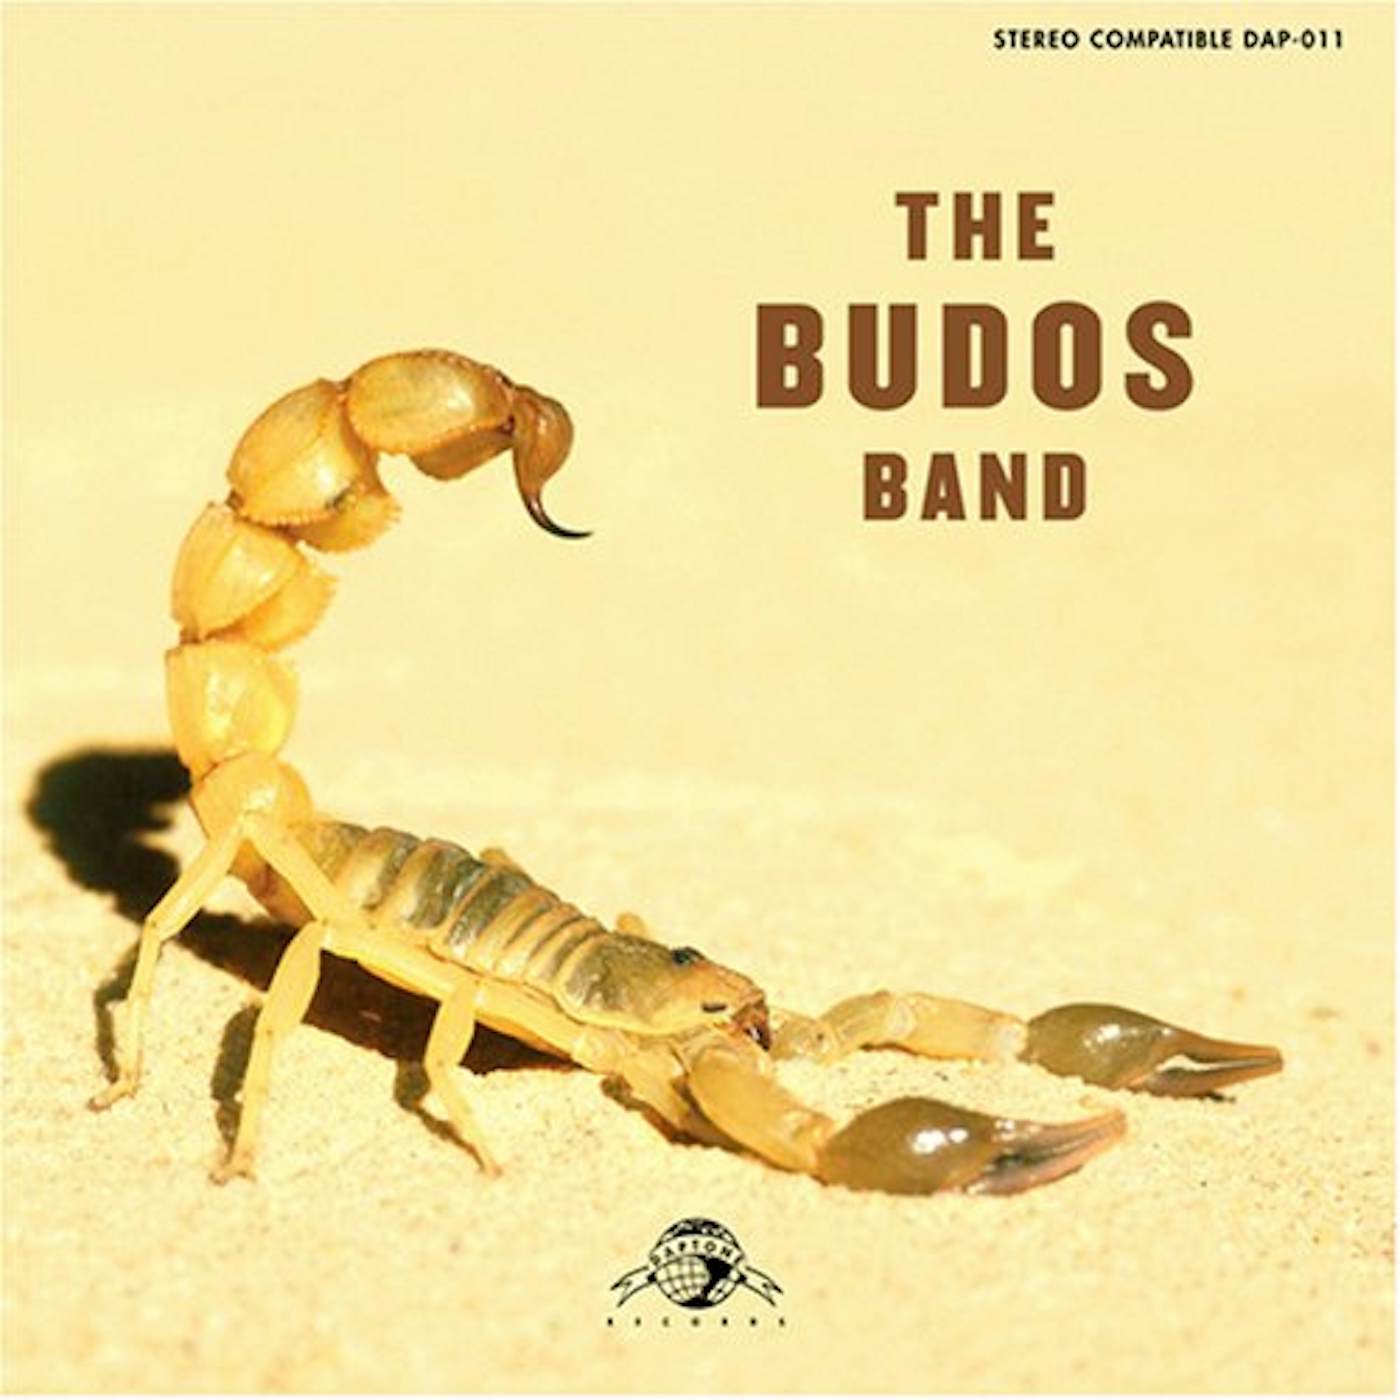 The Budos Band II Vinyl Record